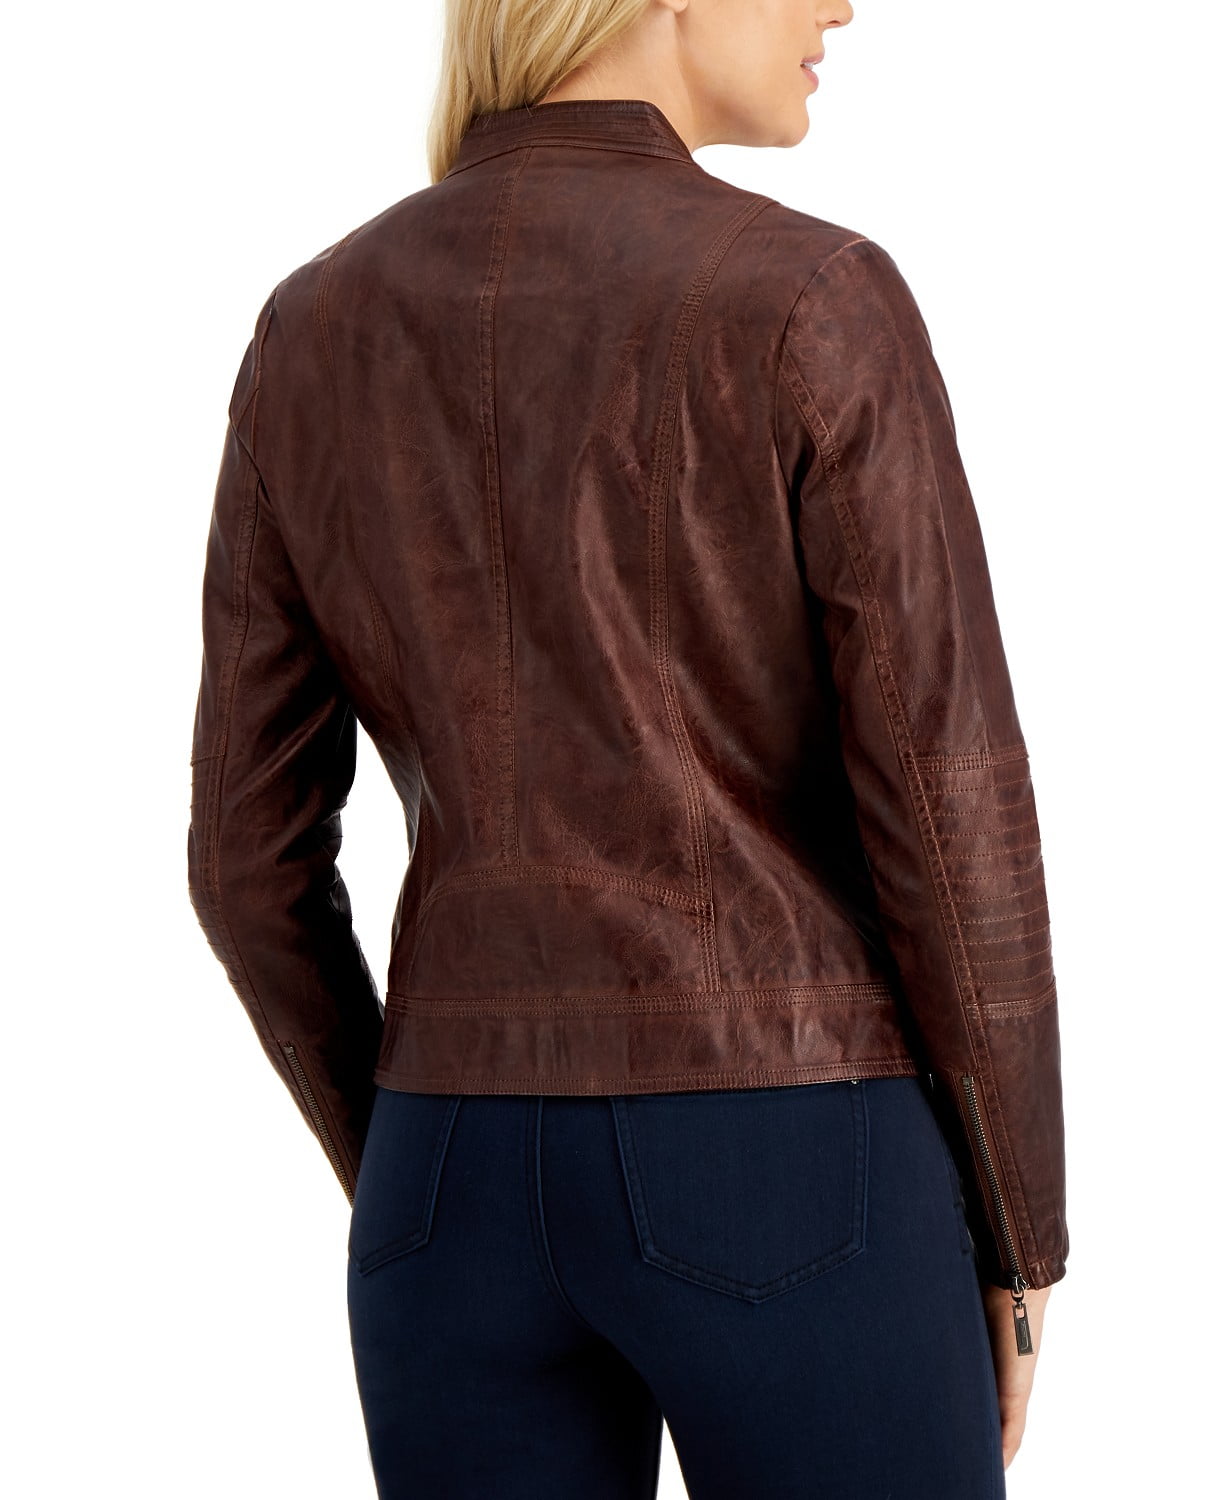 www.couturepoint.com-jou-jou-womens-brown-faux-leather-jacket